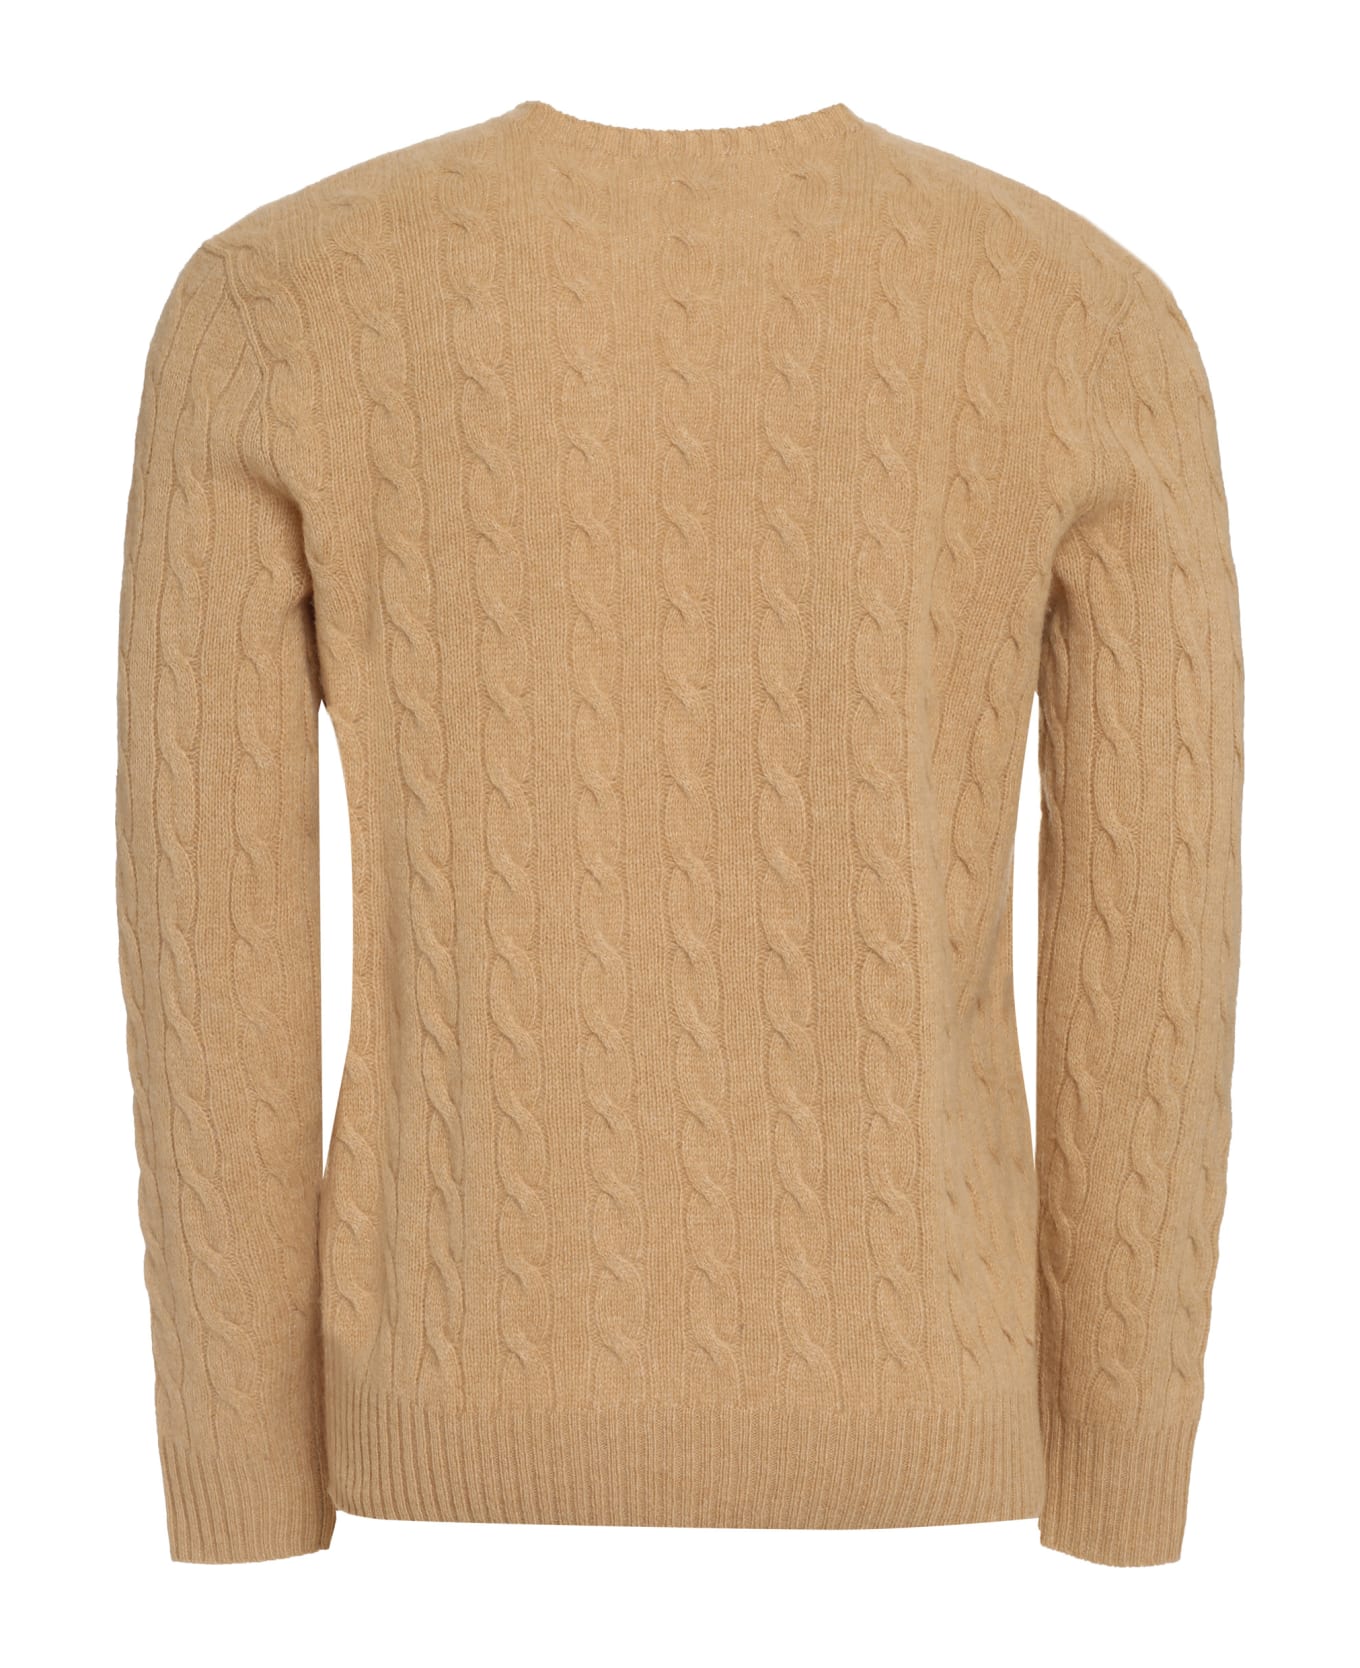 Polo Ralph Lauren Ribbed Sweater - Camel Melange